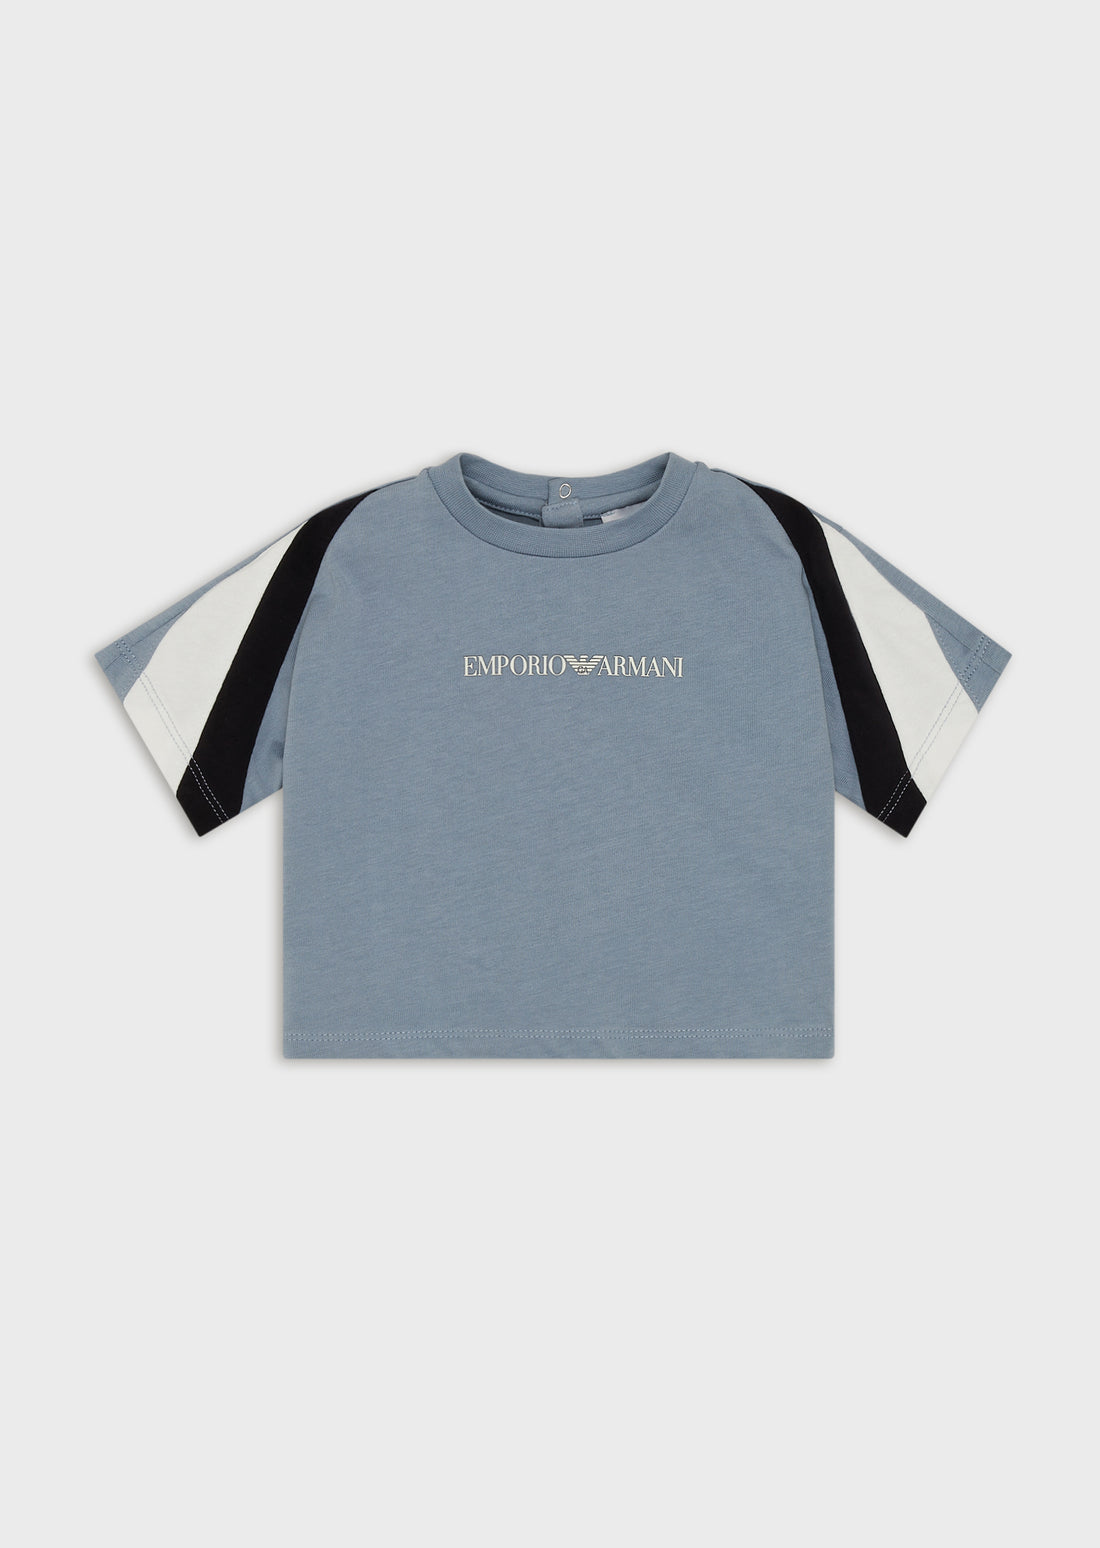 Emporio Armani T-Shirt Style:3Rhtja